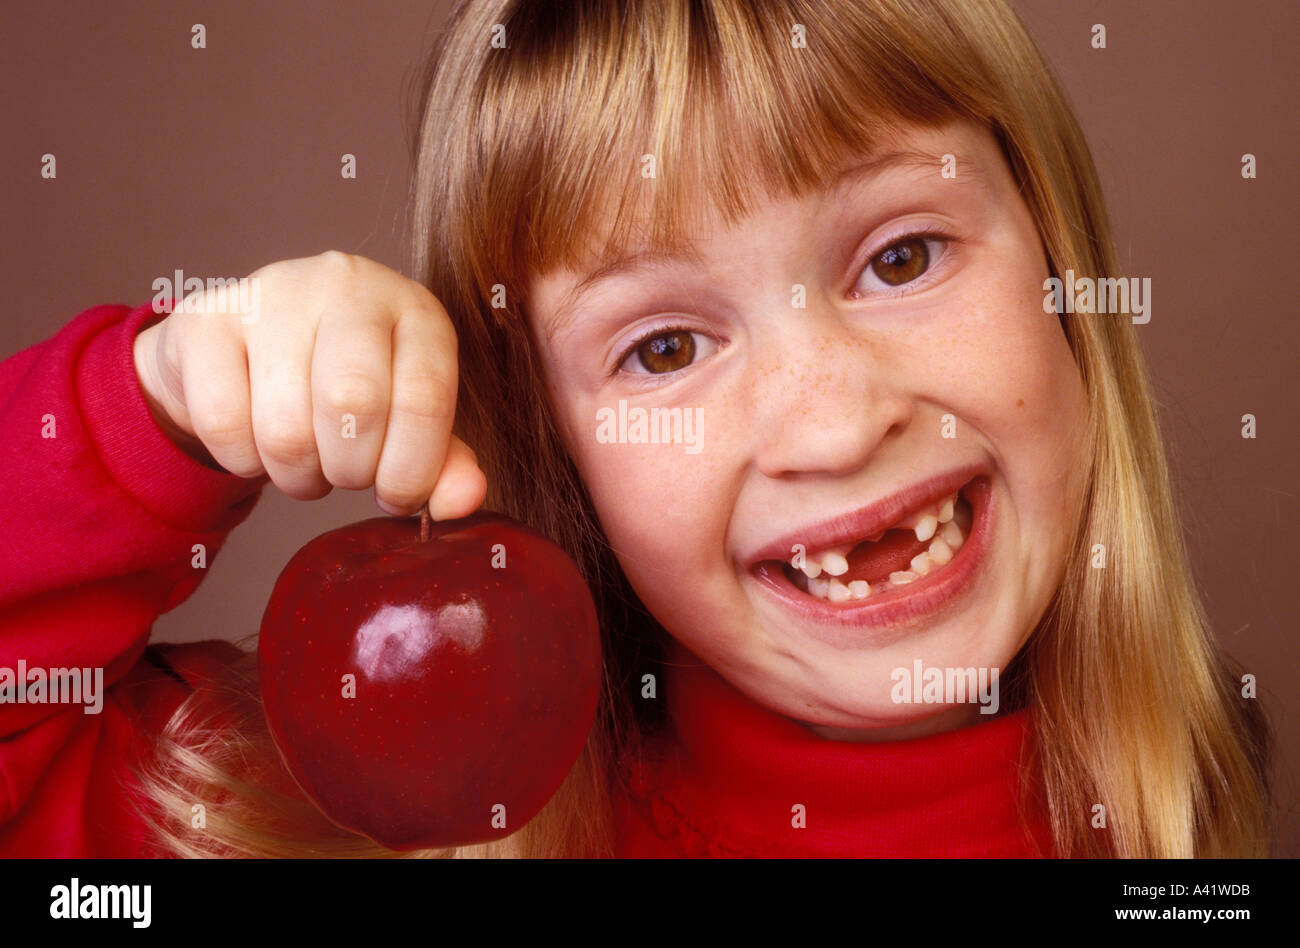 Little girl holding apple missing front teeth Stock Photo